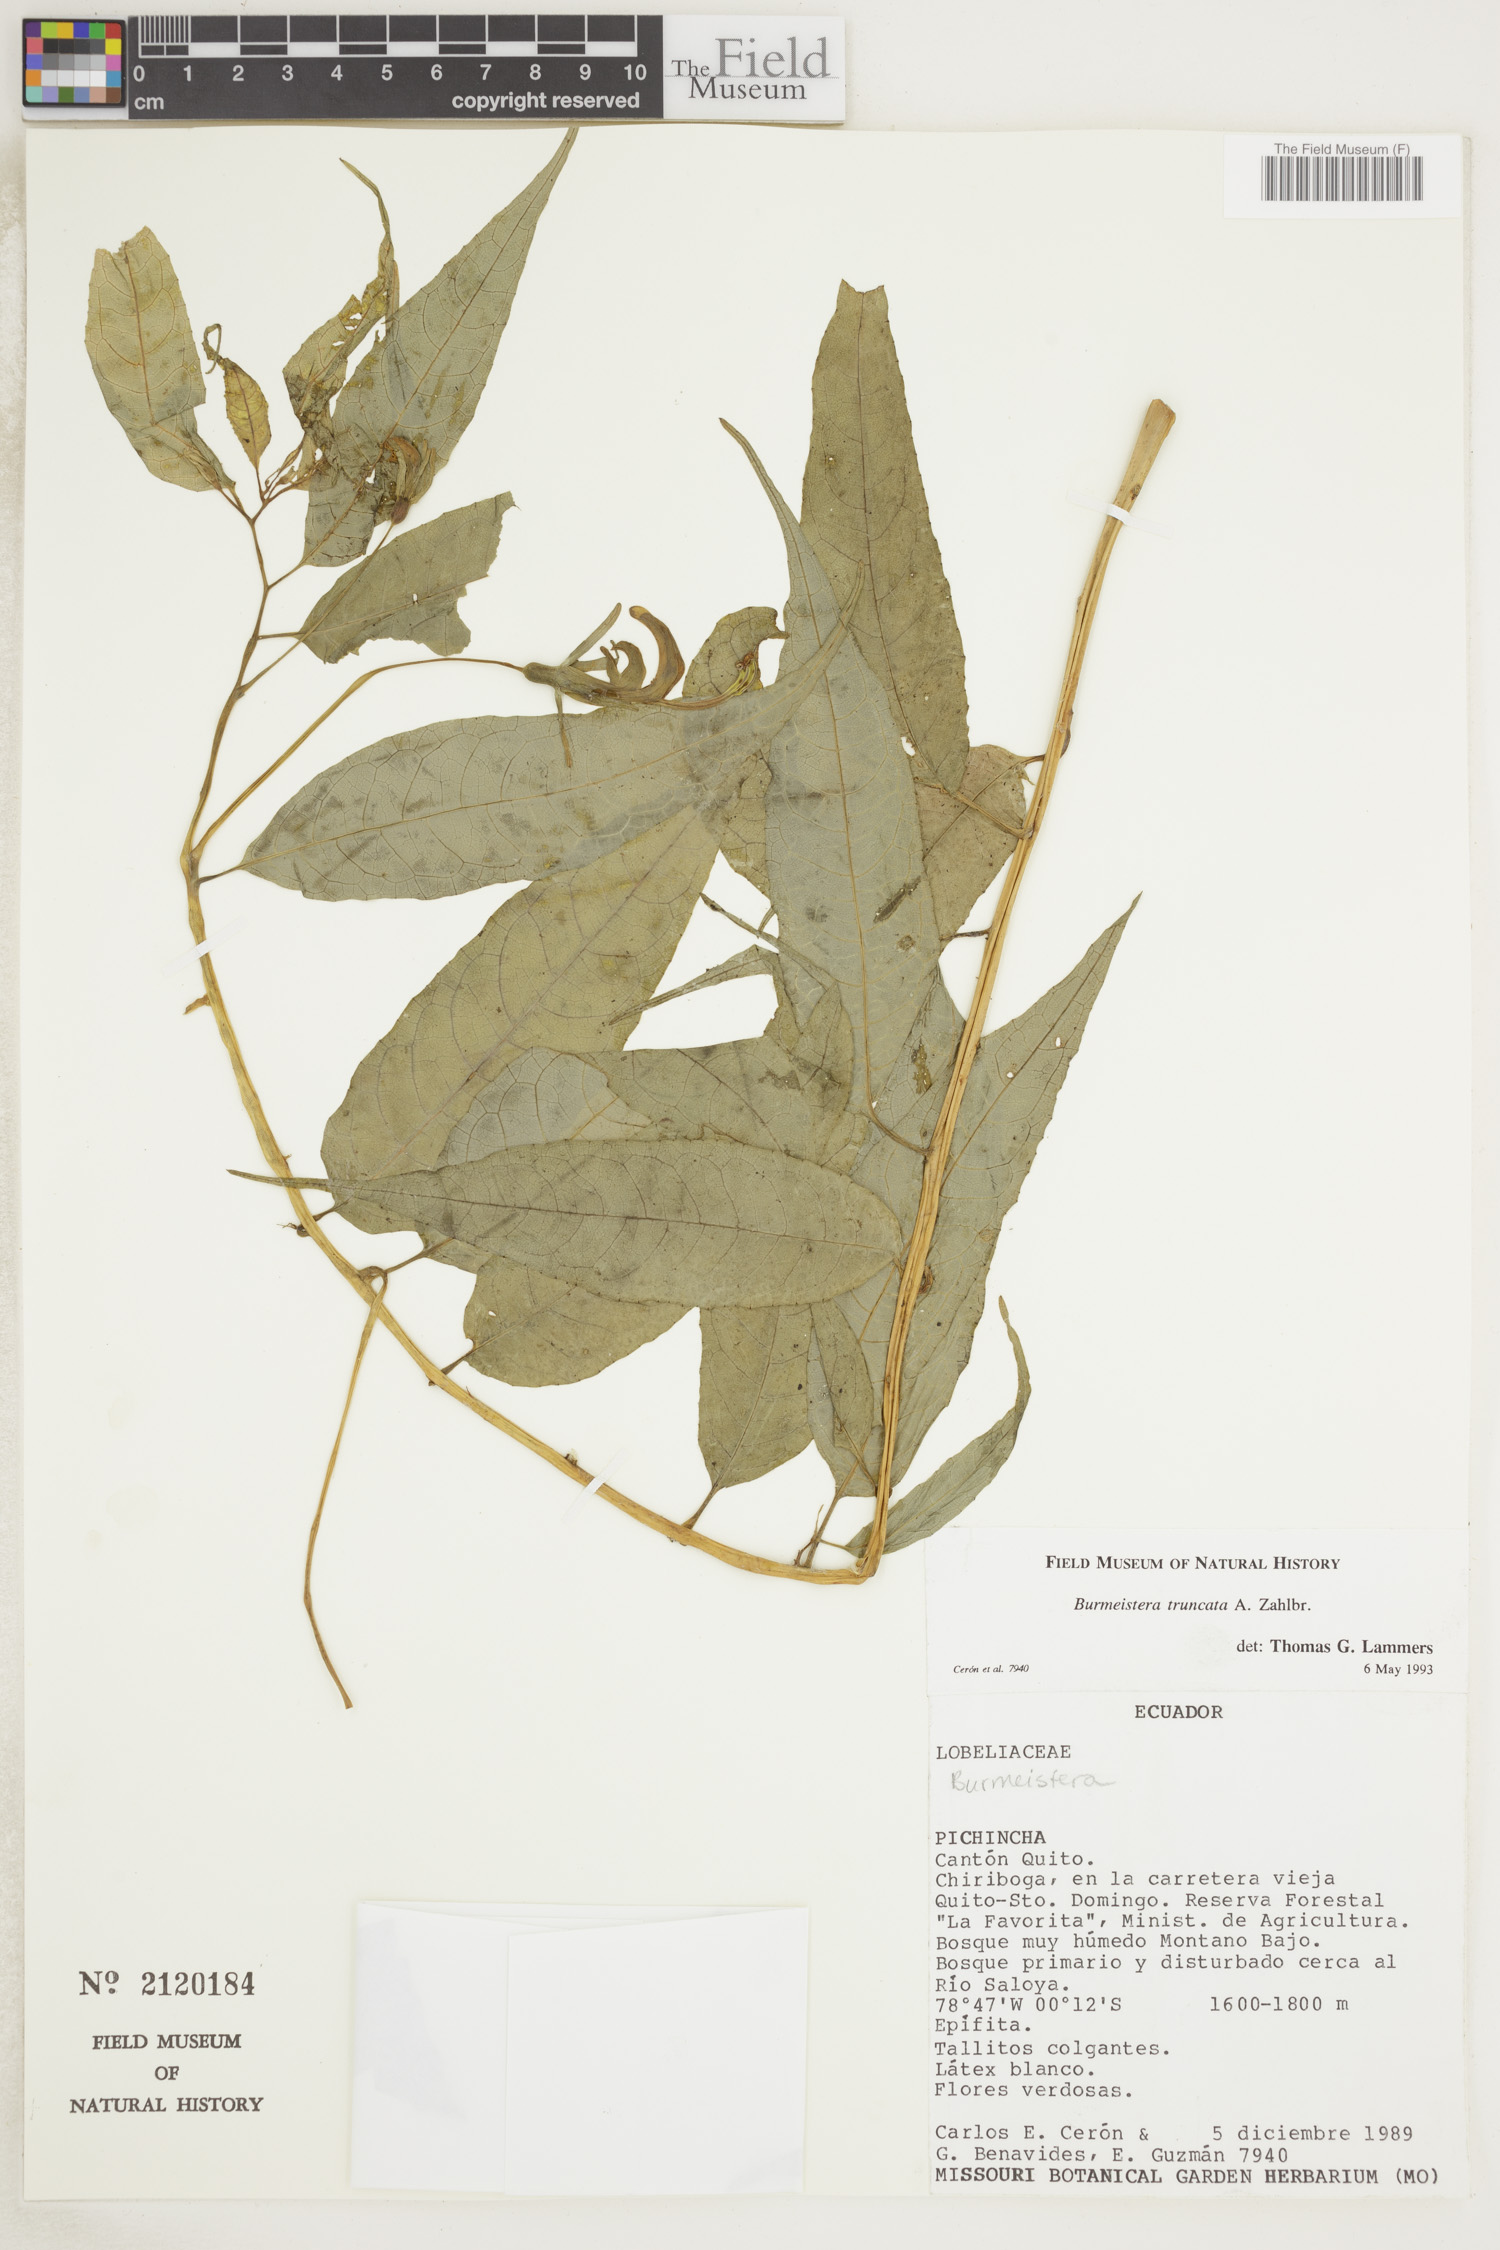 Burmeistera truncata image